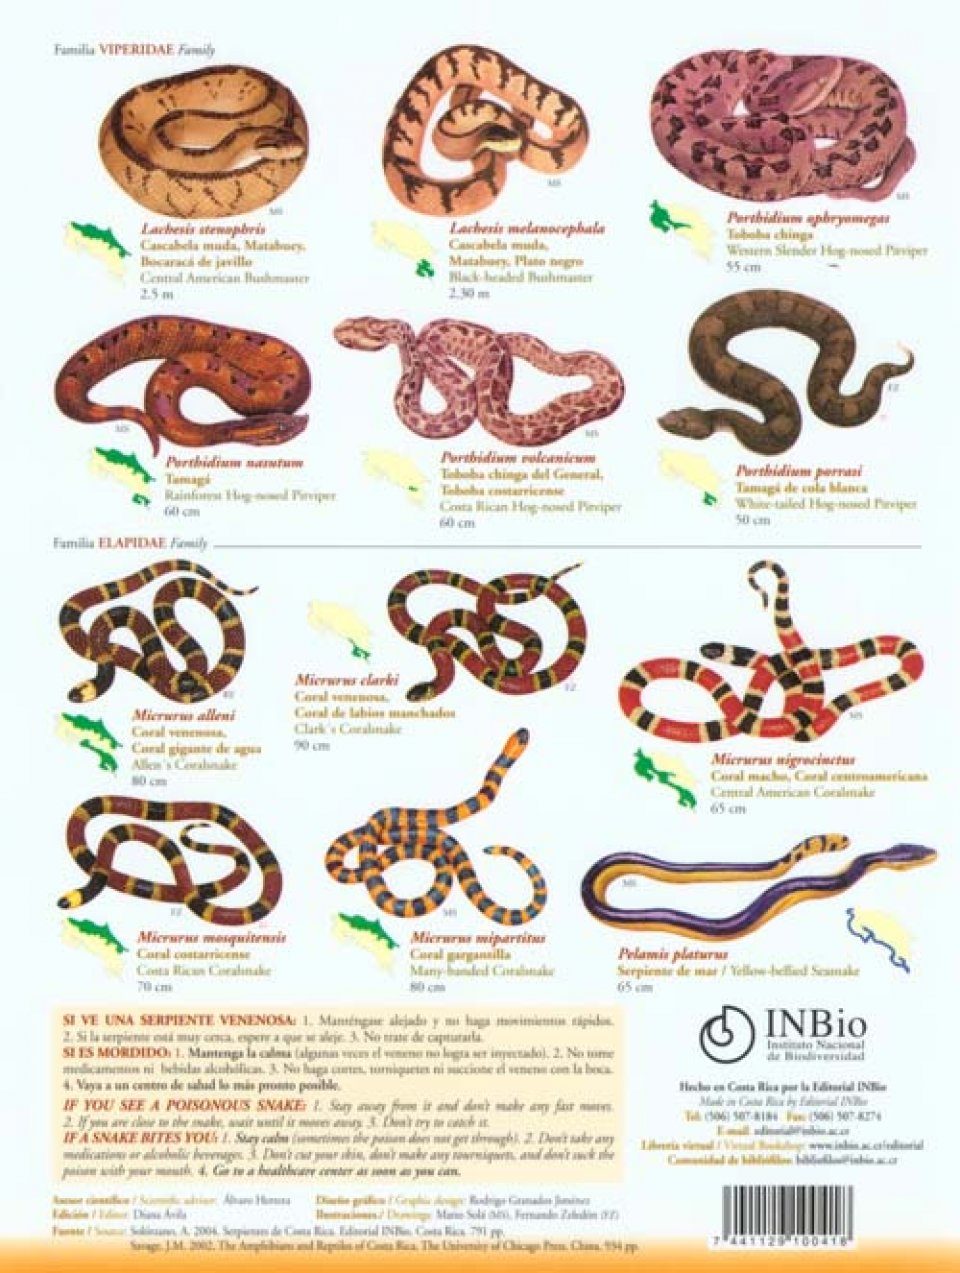 Snakes Identification Chart